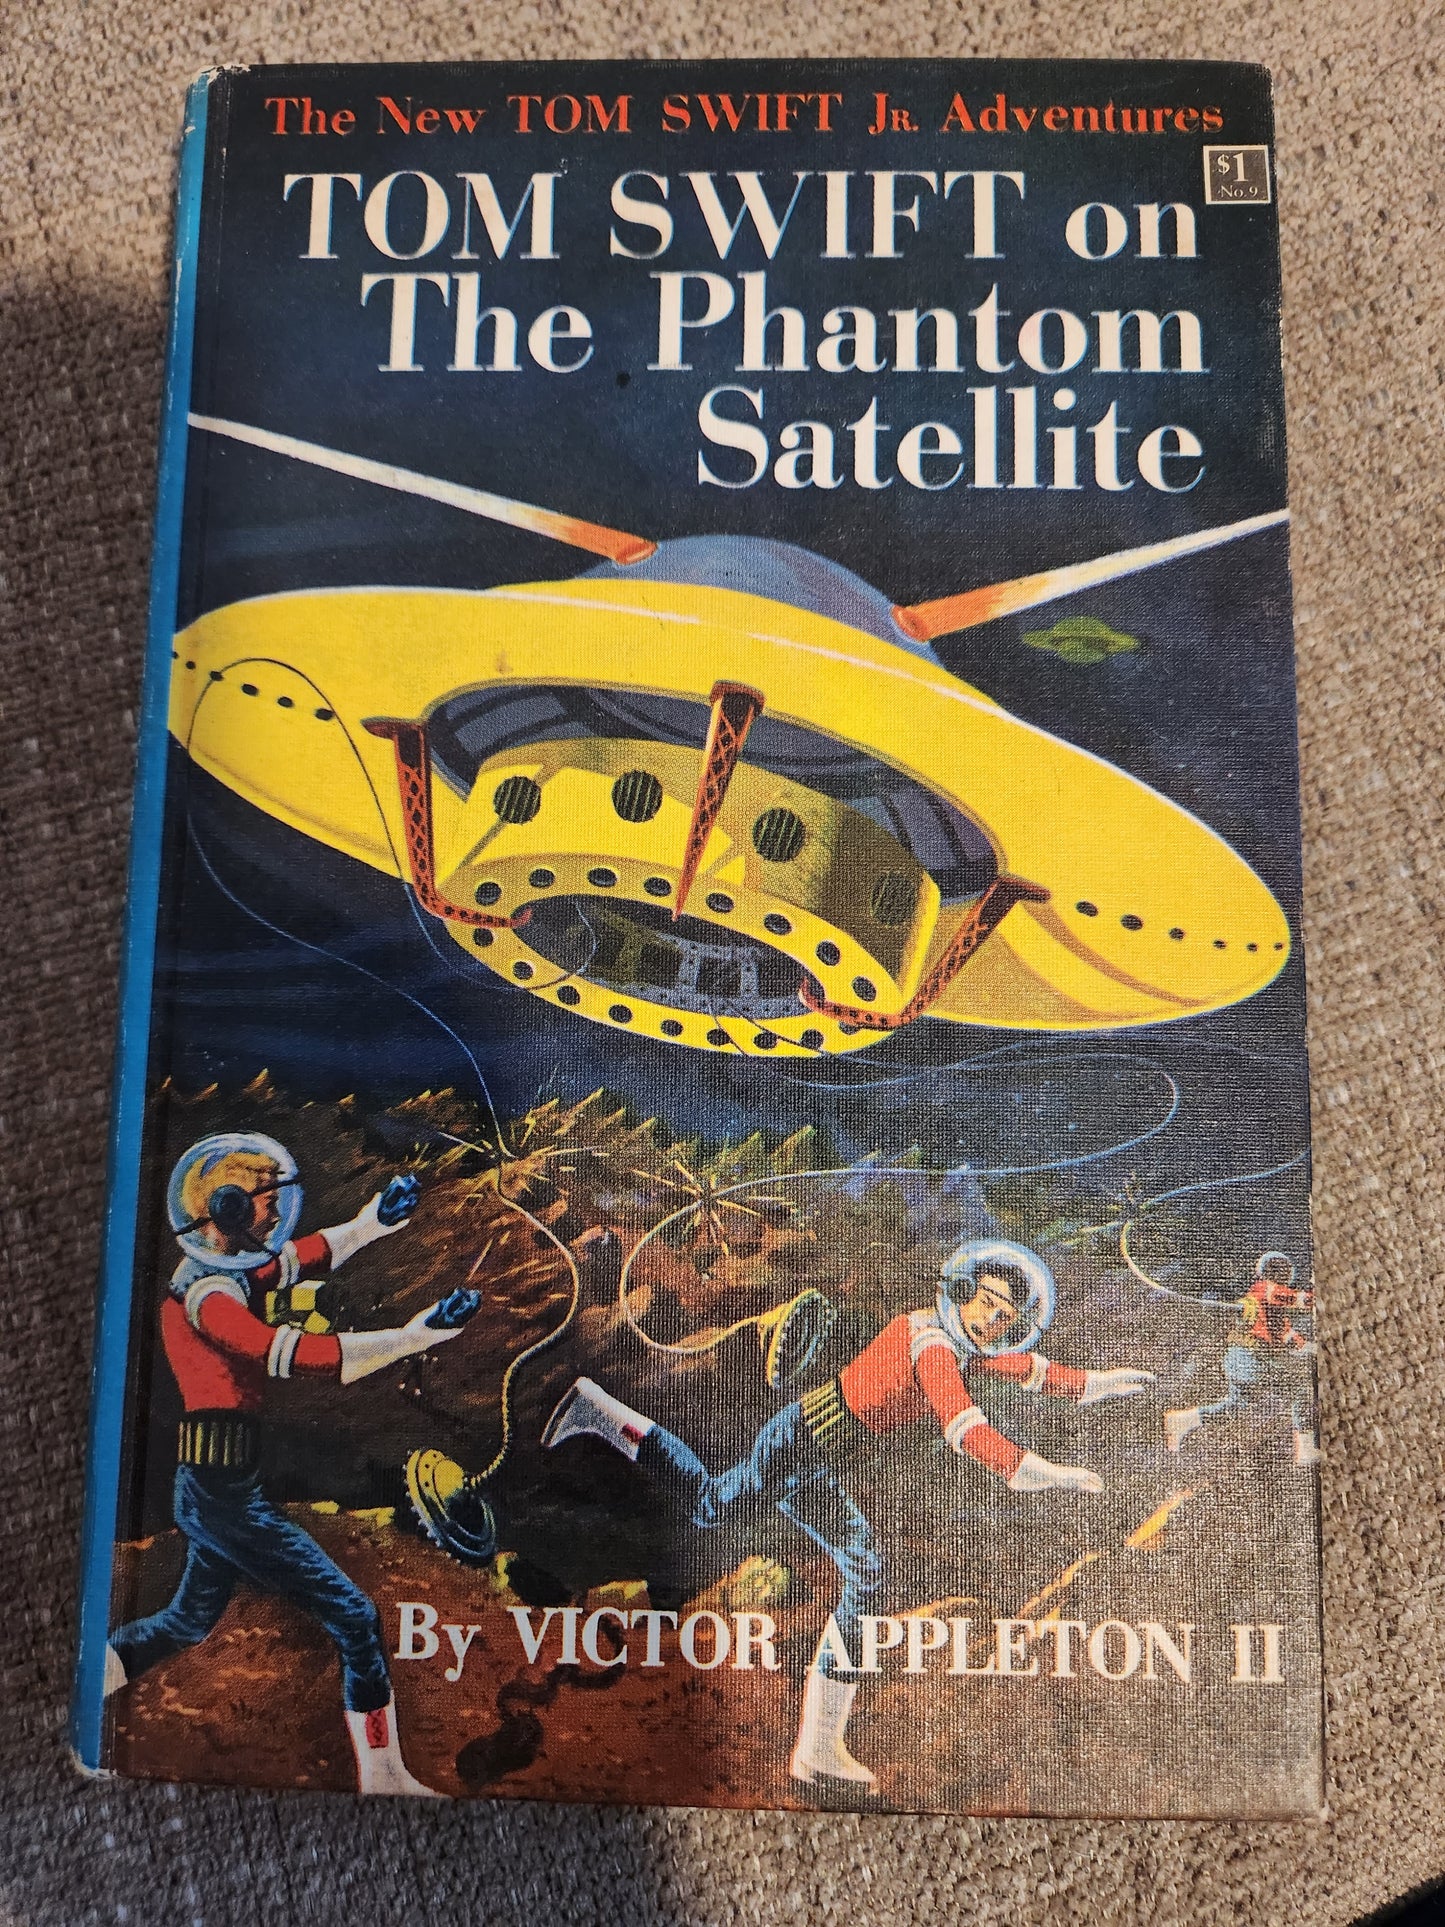 "Tom Swift on The Phantom Satellite" by Victor Appleton II (Blue Spine)